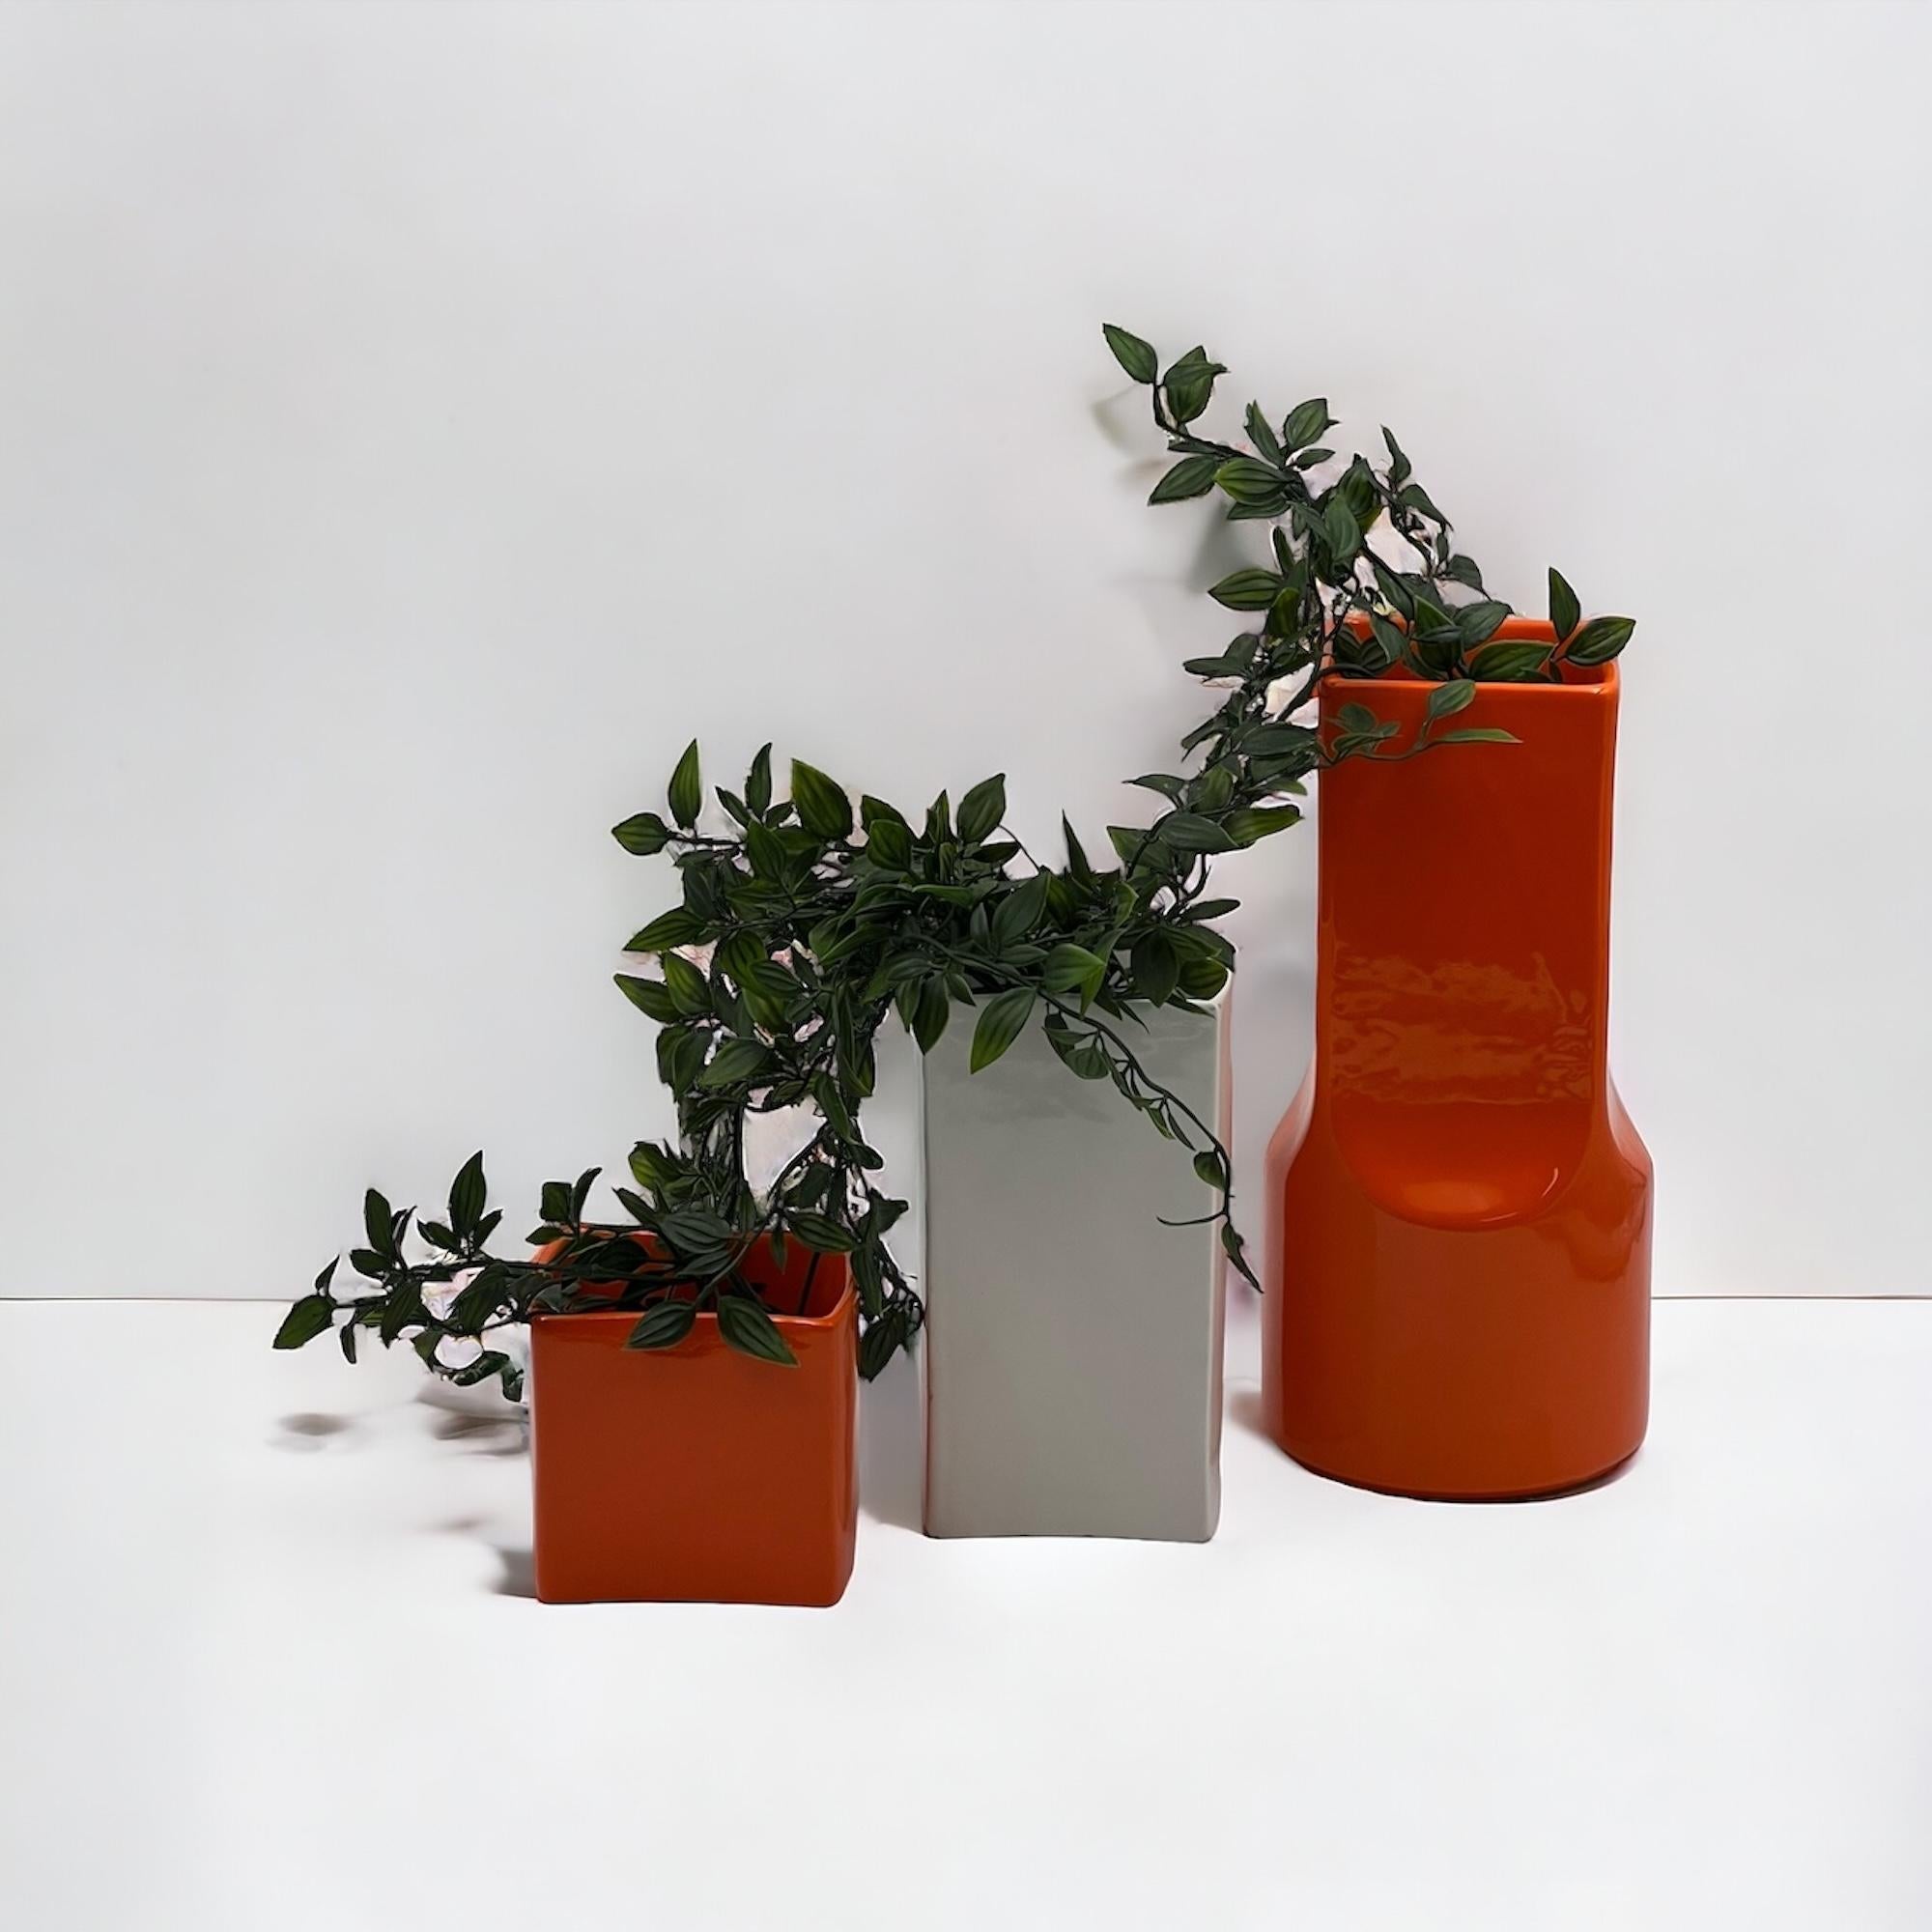 Space Age Gabbianelli Handmade Ceramic Vases in Orange and White, 1960s For Sale 5